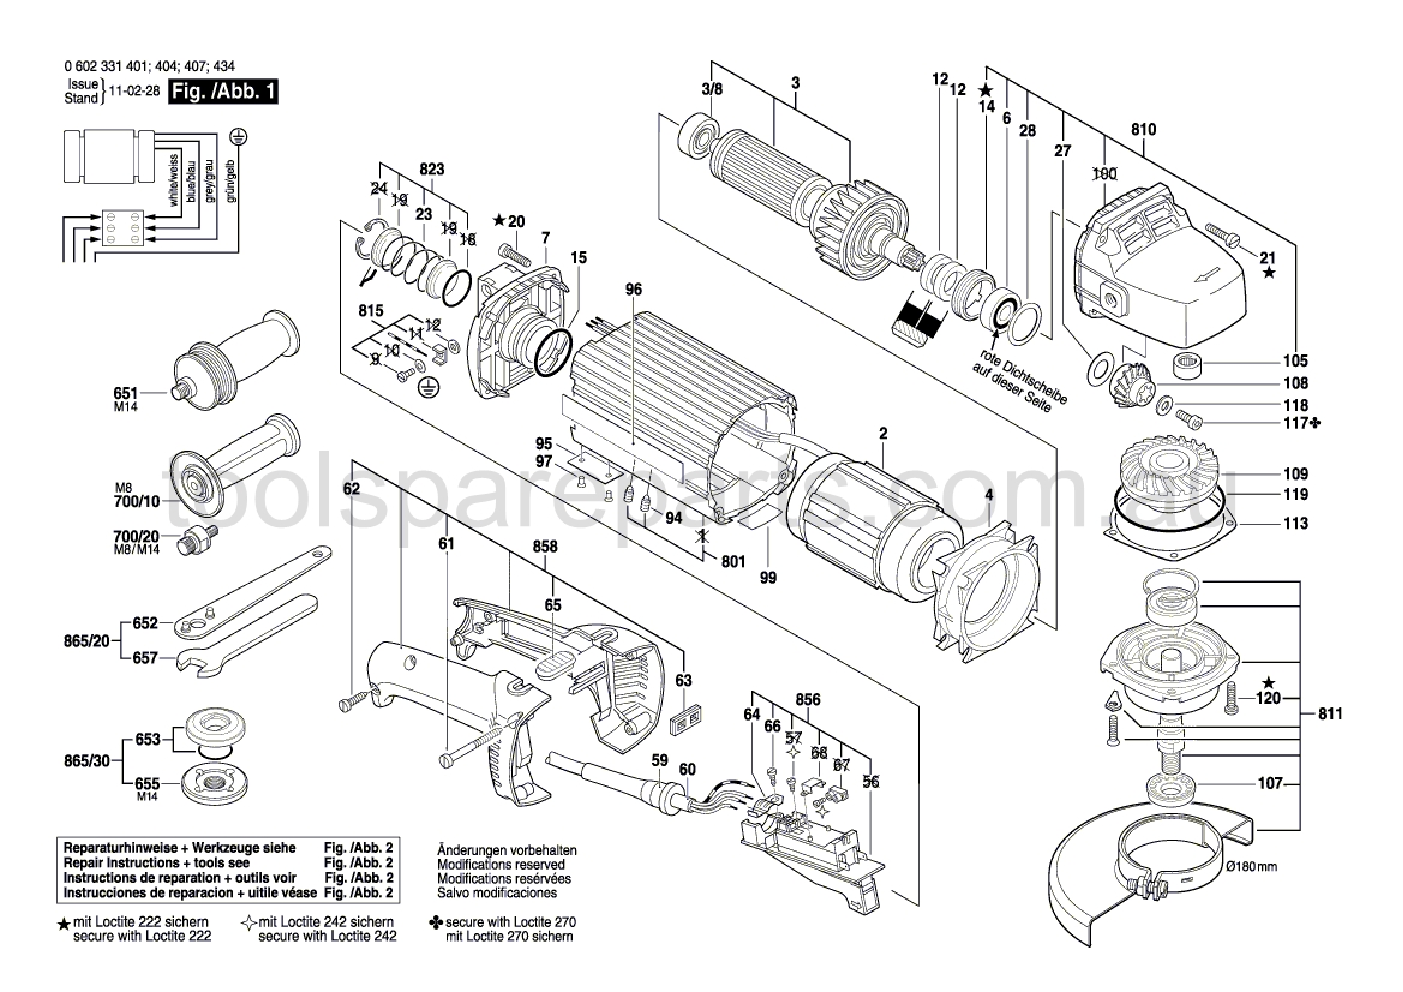 Bosch ---- 0602331404  Diagram 1